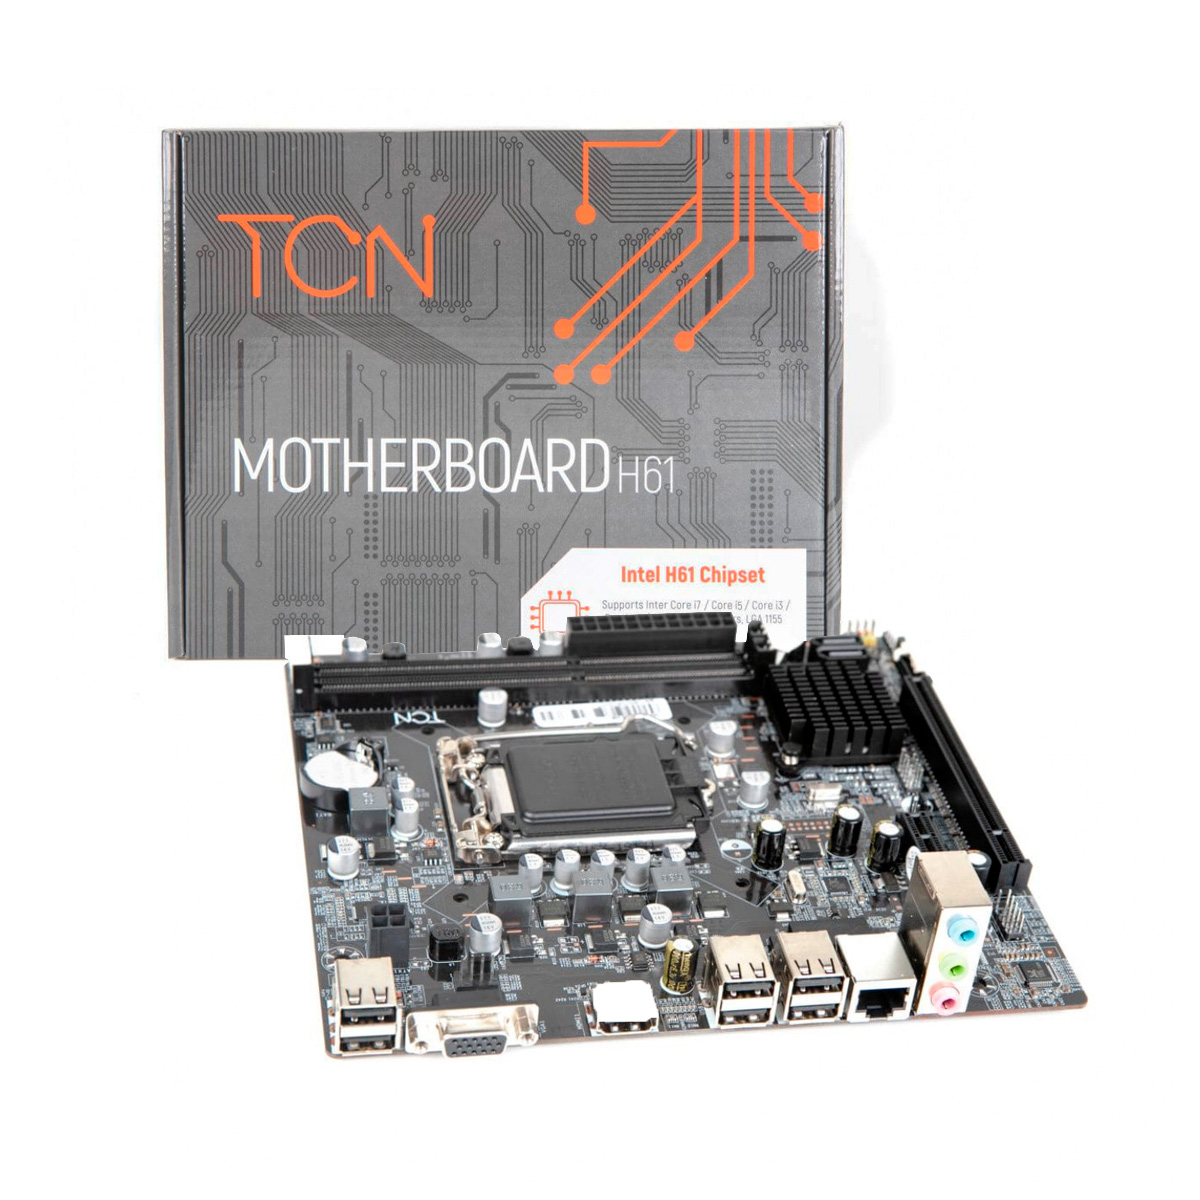 Placa Mãe TCN H61 (LGA 1155 - DDR3 1600) - Chipset Intel H61 - Micro ATX